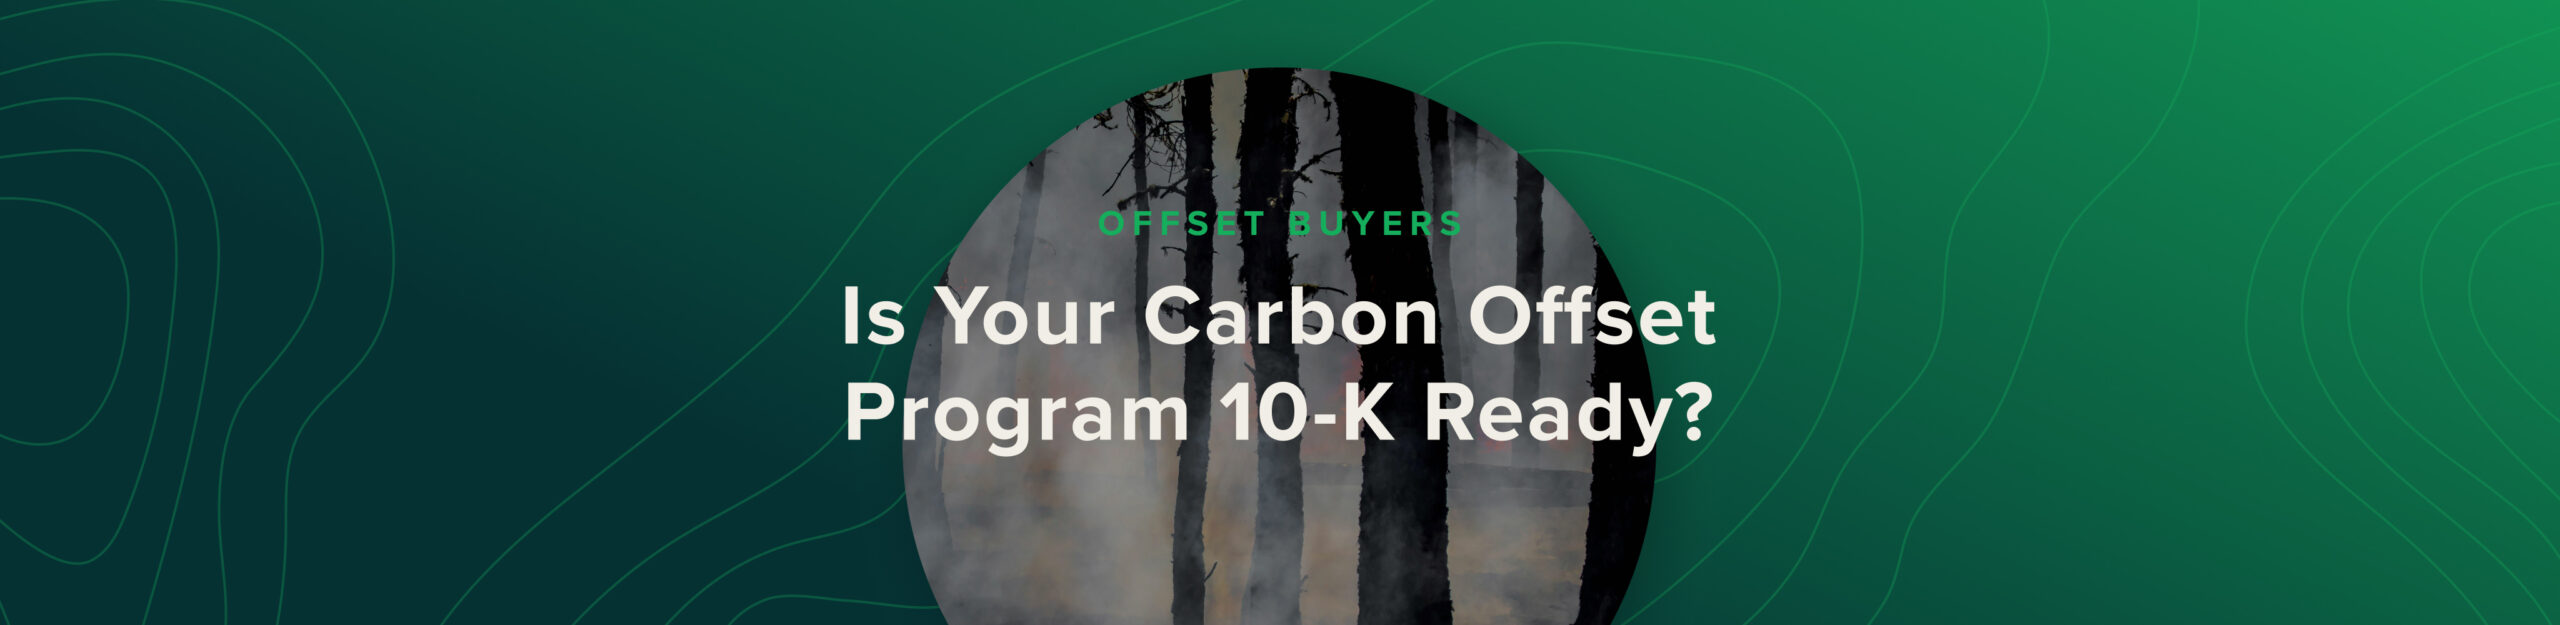 Carbon Offset 10-K Ready blog